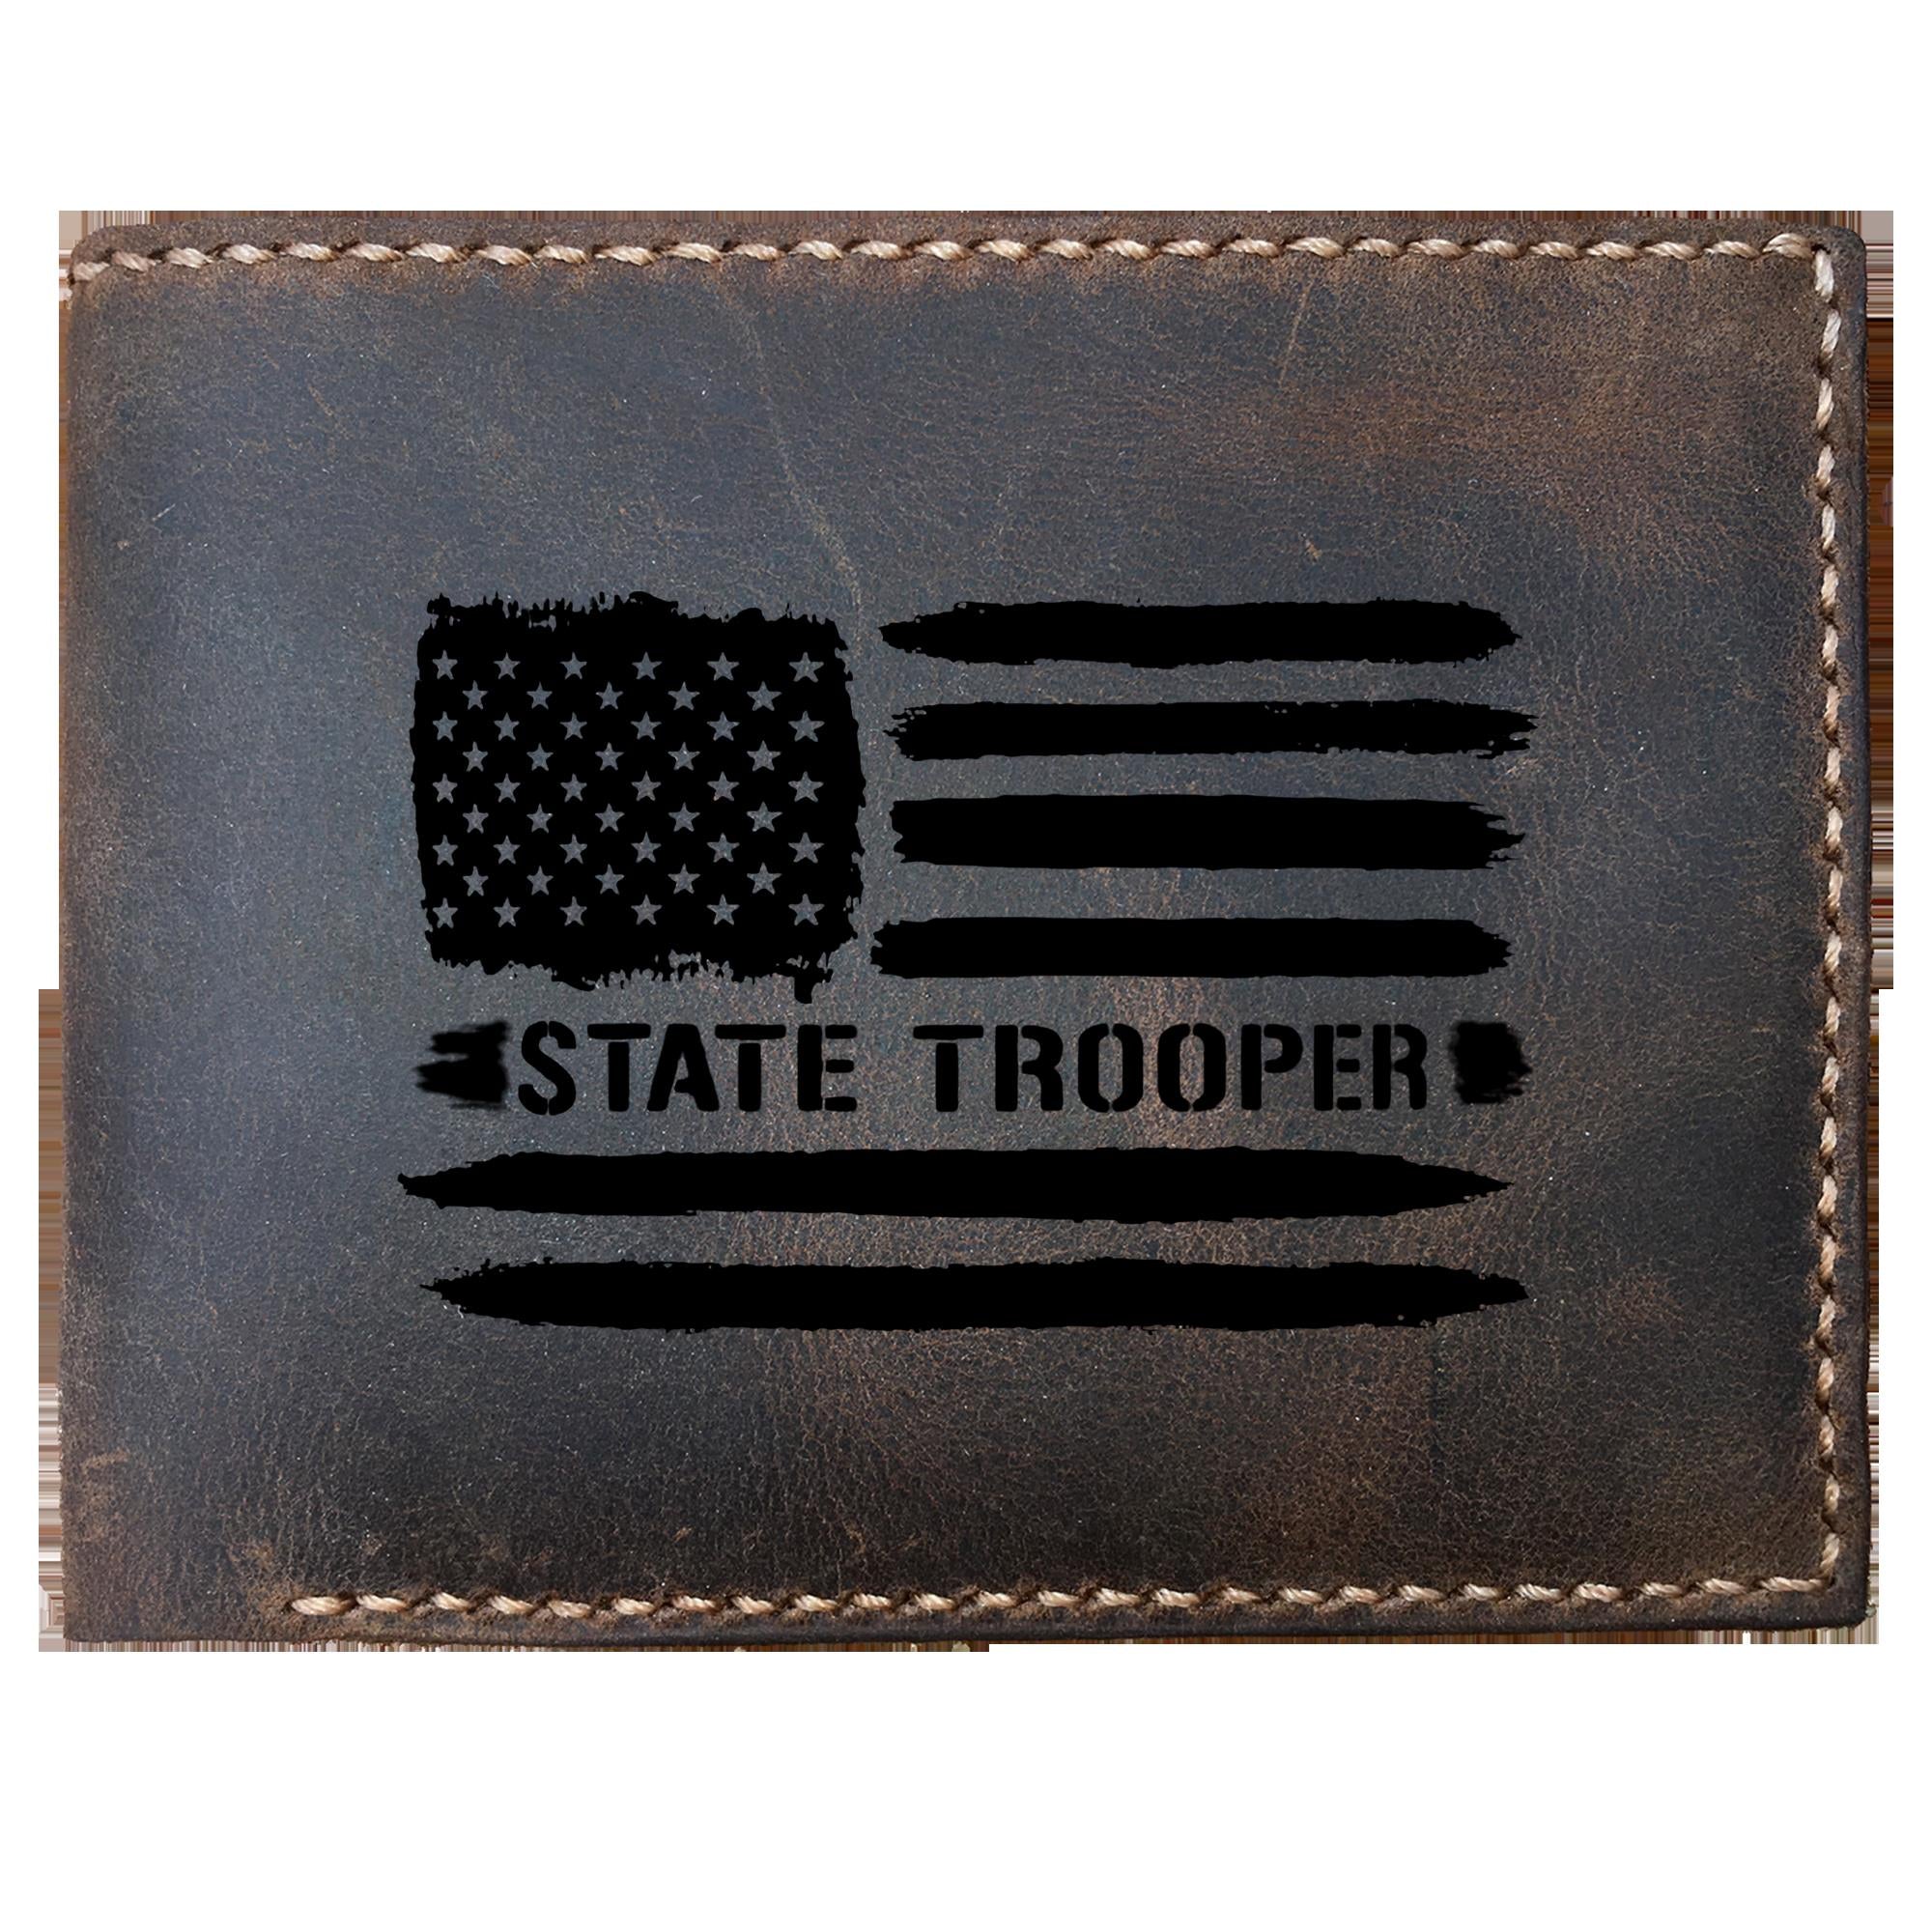 Skitongifts Funny Custom Laser Engraved Bifold Leather Wallet For Men, State Trooper American Flag Patriotic Trooper Cop Law Enforcement Officer